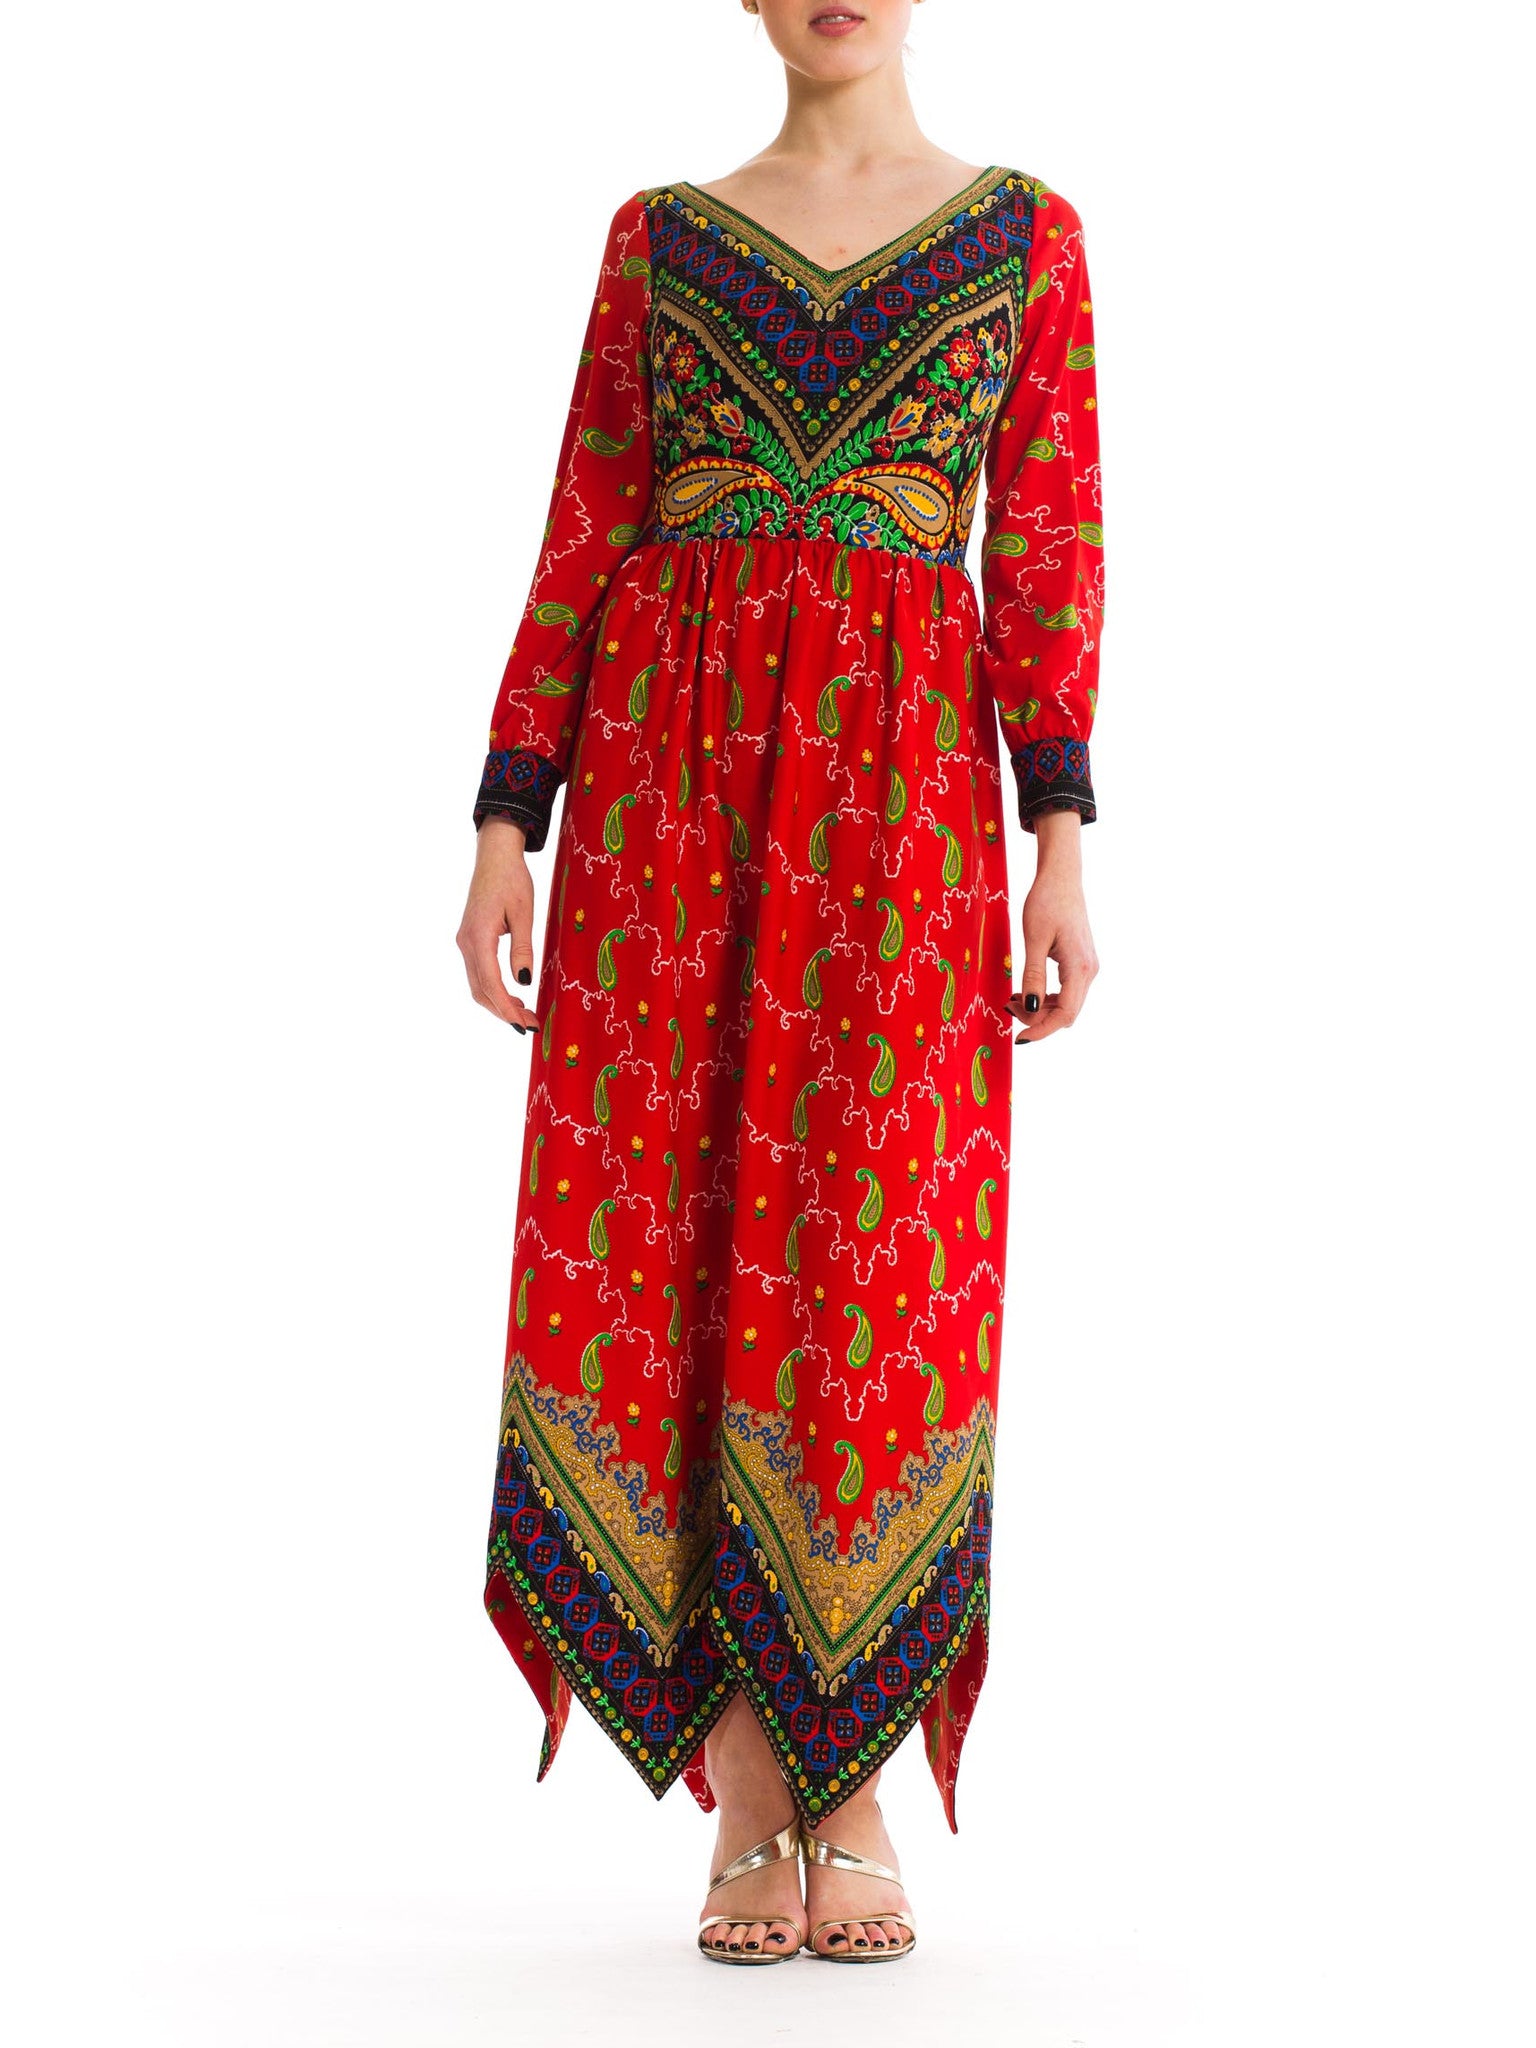 Opulently Colorful Vintage 1970s Ethnic Paisley Print Dress – MORPHEW